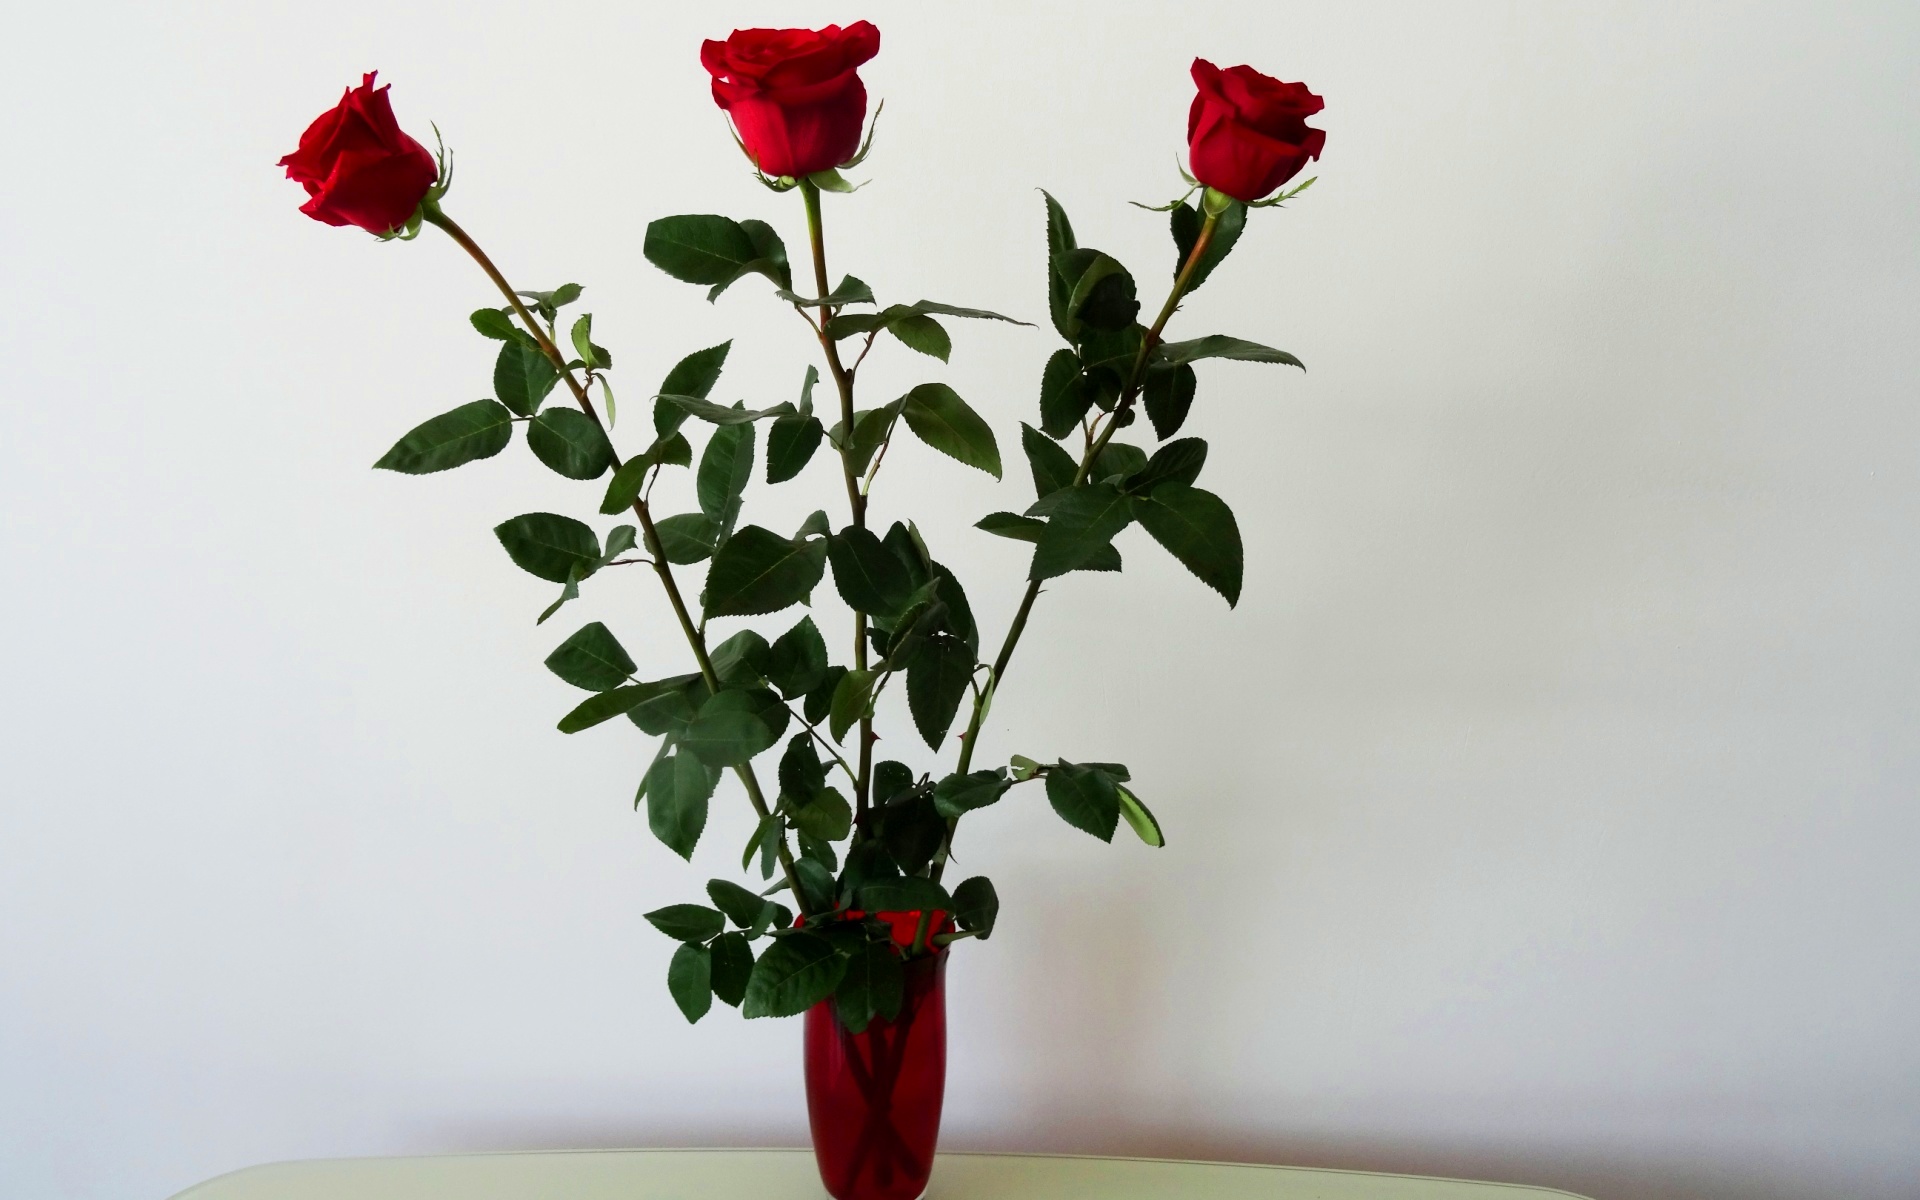 Условия для роз в вазе. Стебель розы. Домашние розы. Розы в вазе. Цветок на стебле.